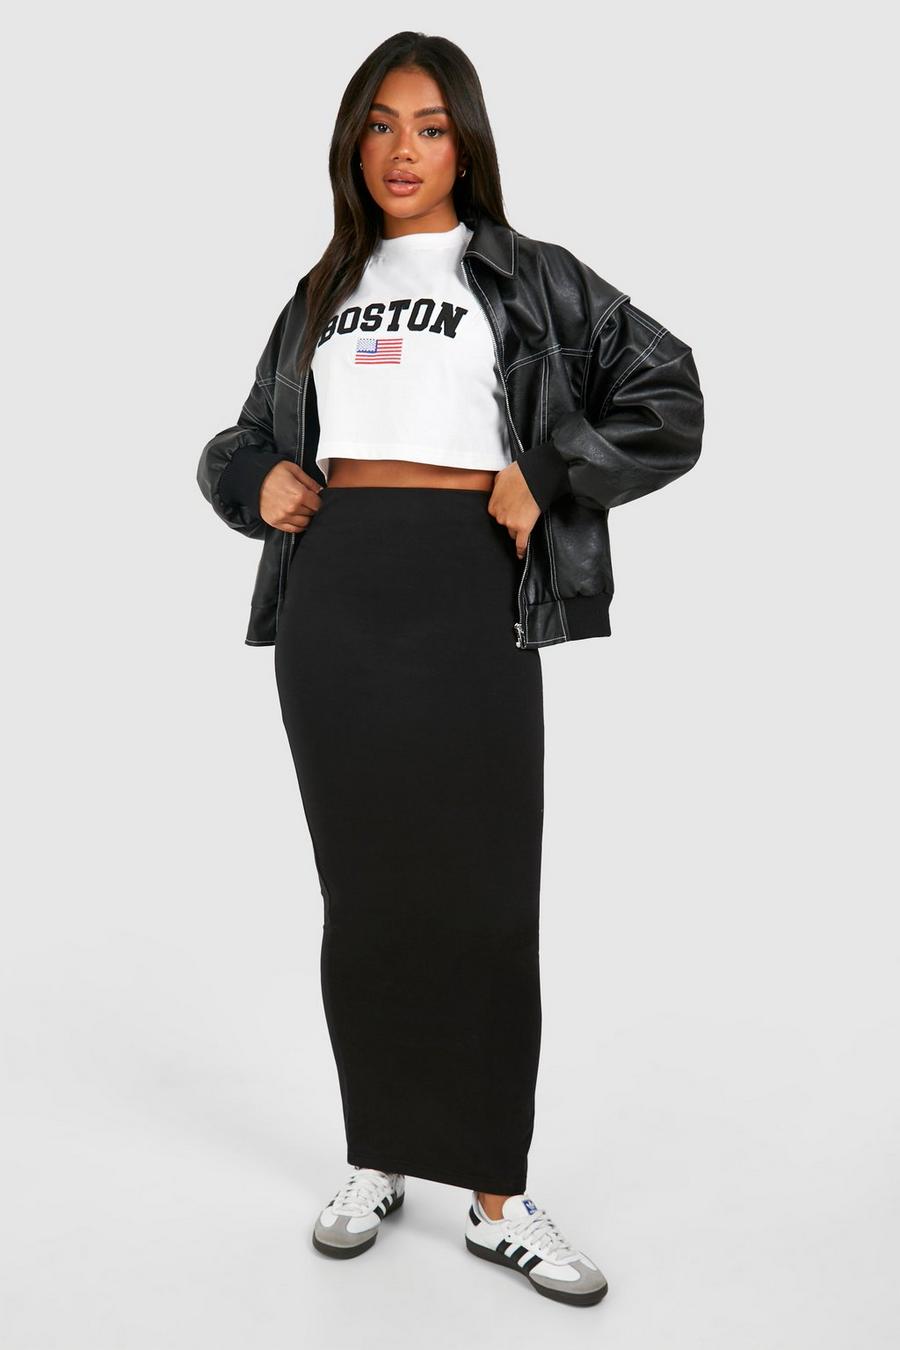 Ensemble à slogan Boston avec t-shirt court et jupe, Black image number 1